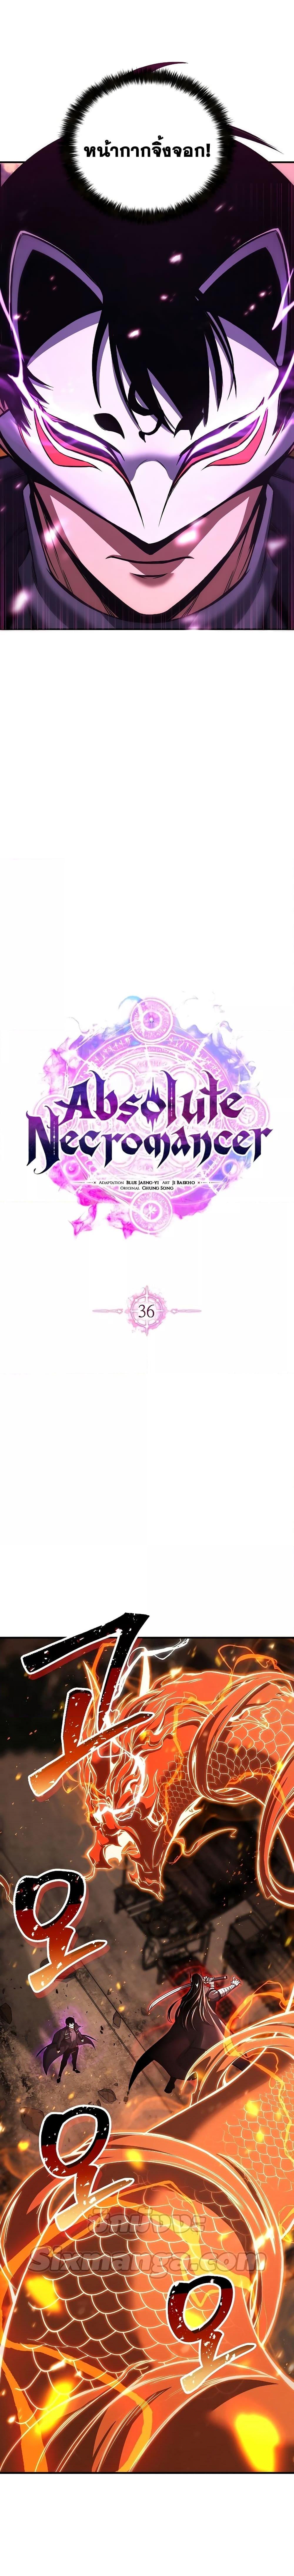 Absolute Necromancer 36 04